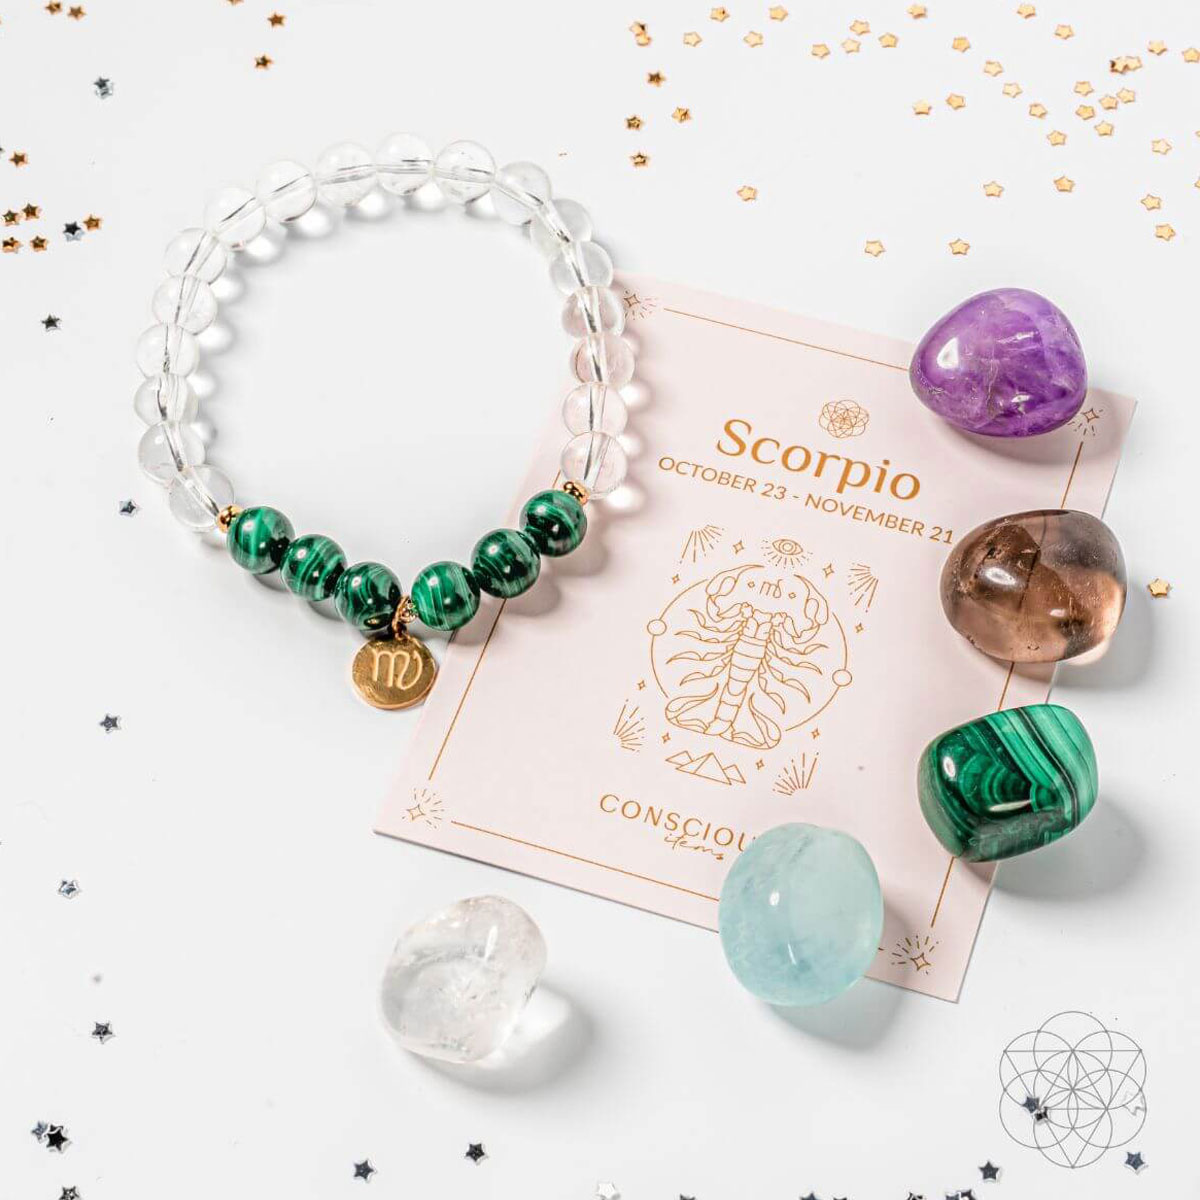 Scorpio crystal gift set